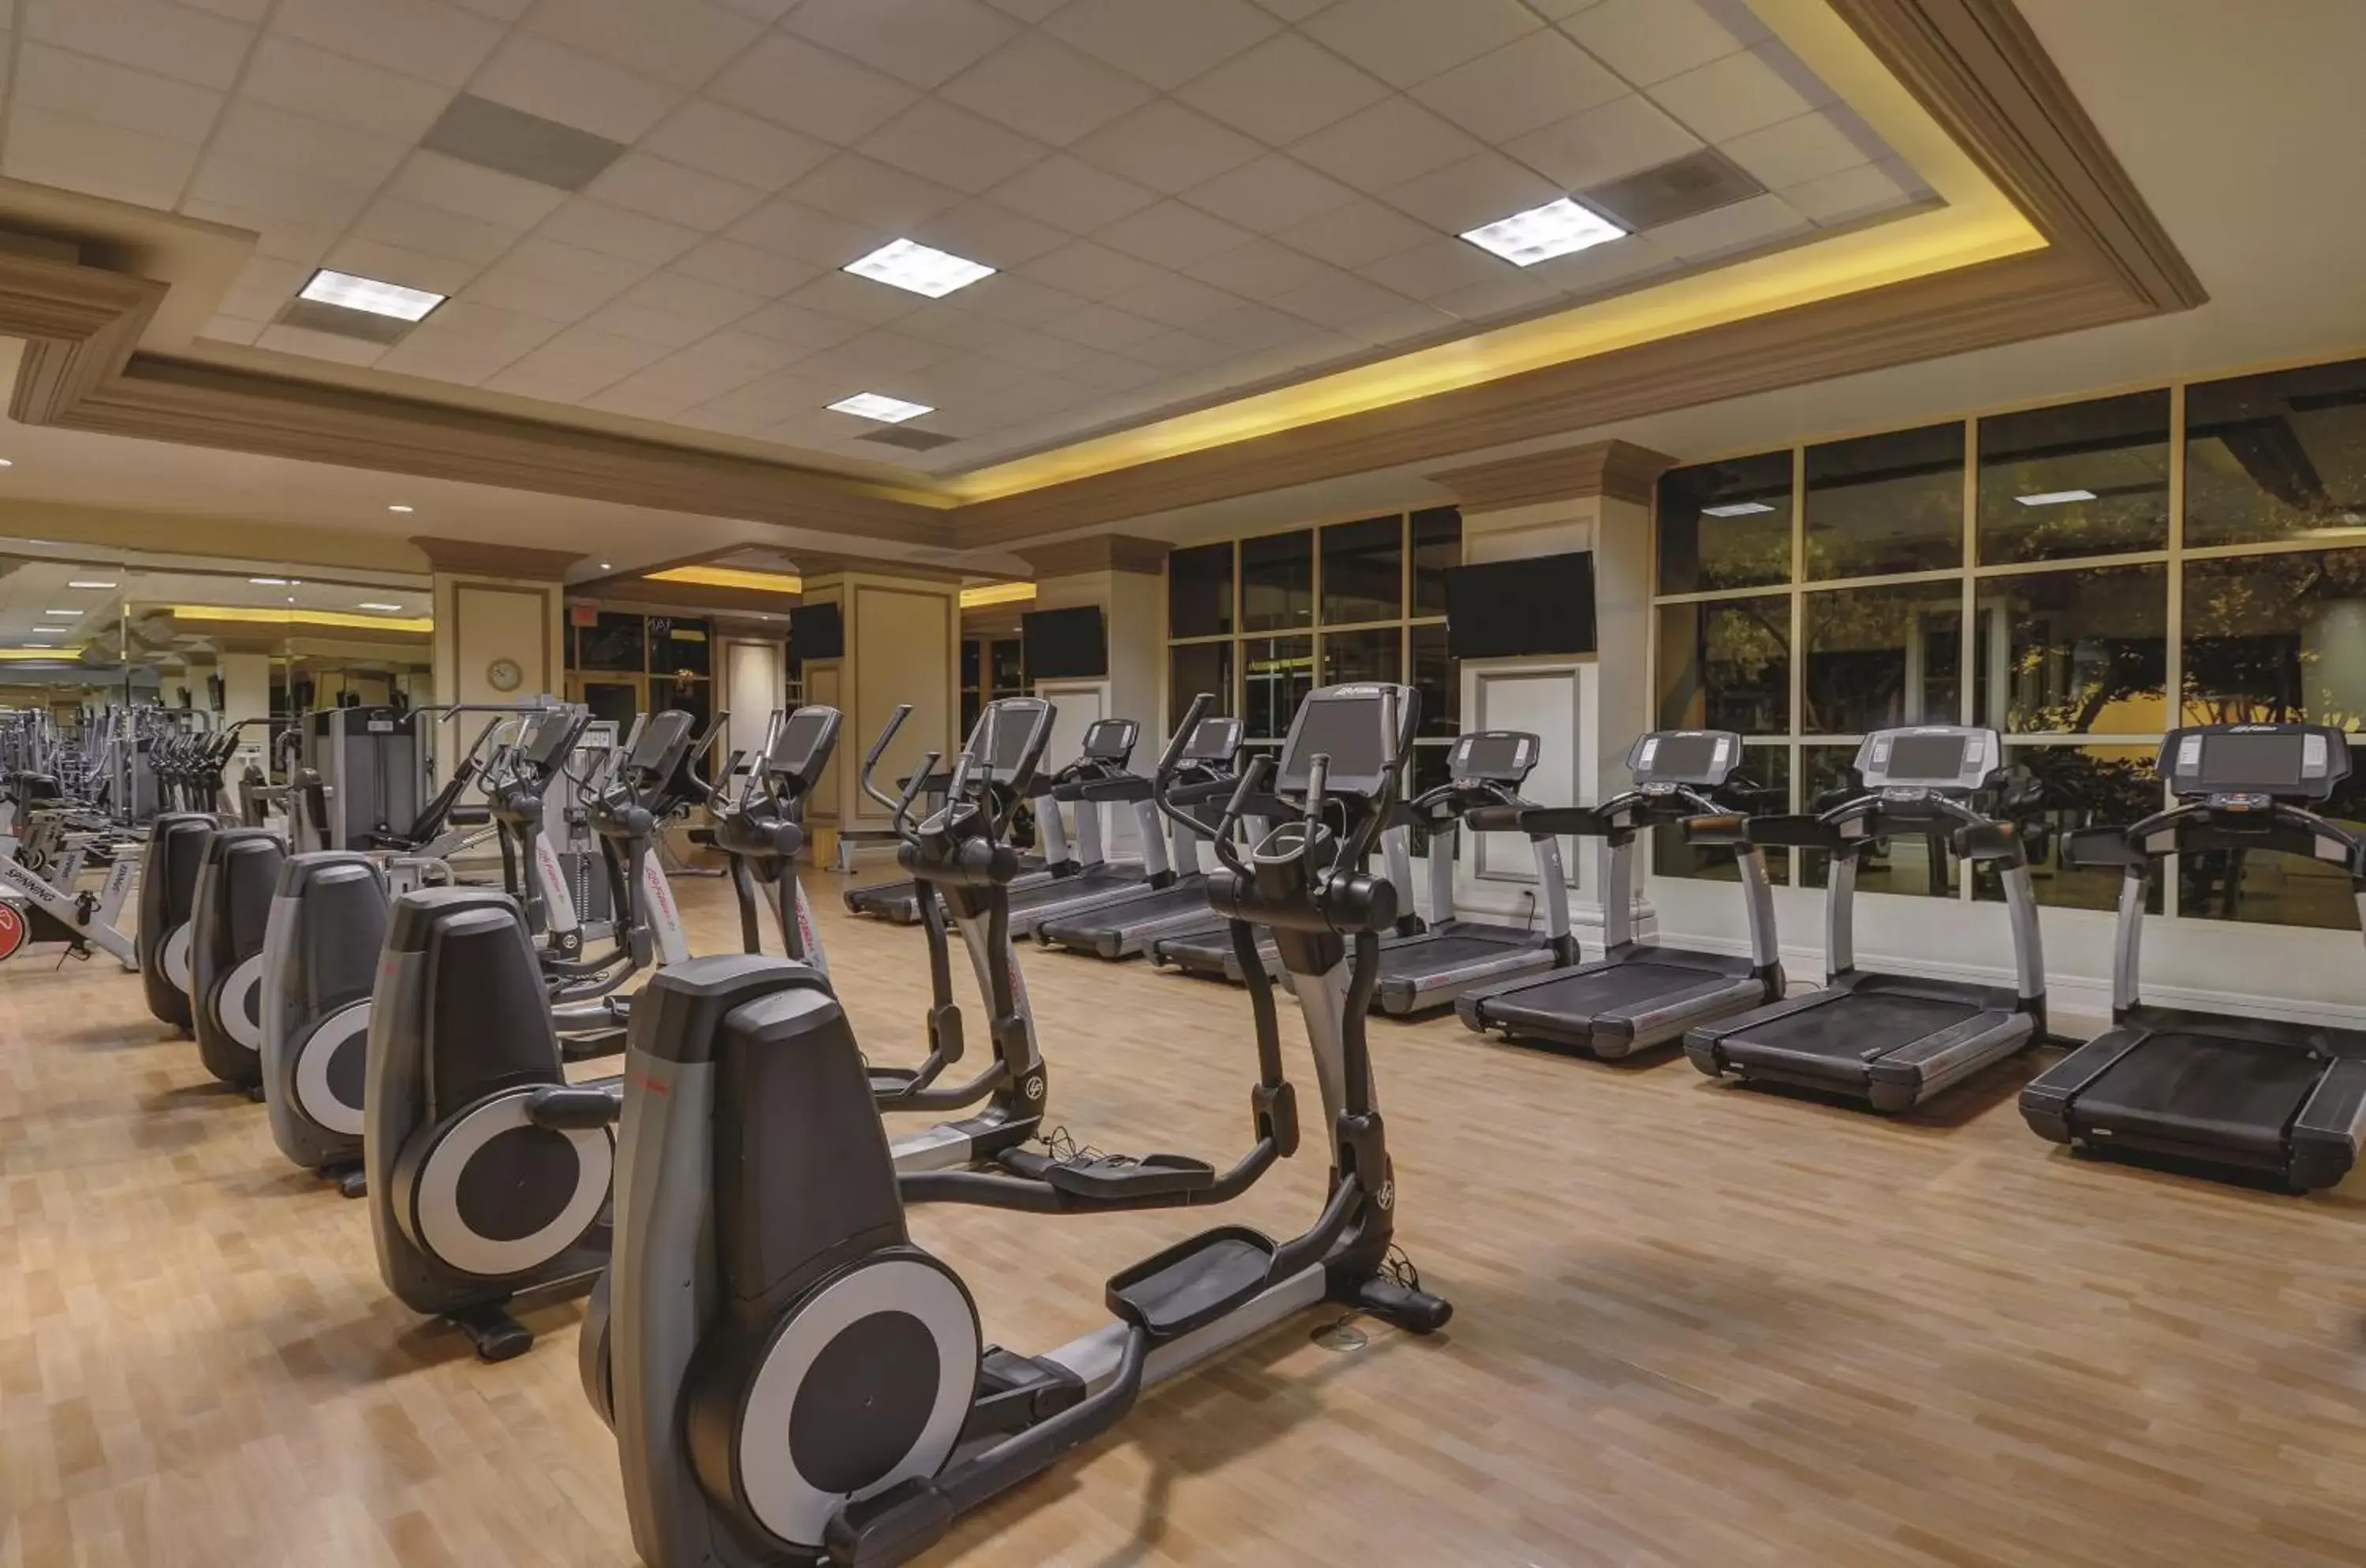 Fitness centre/facilities, Fitness Center/Facilities in Mandalay Bay